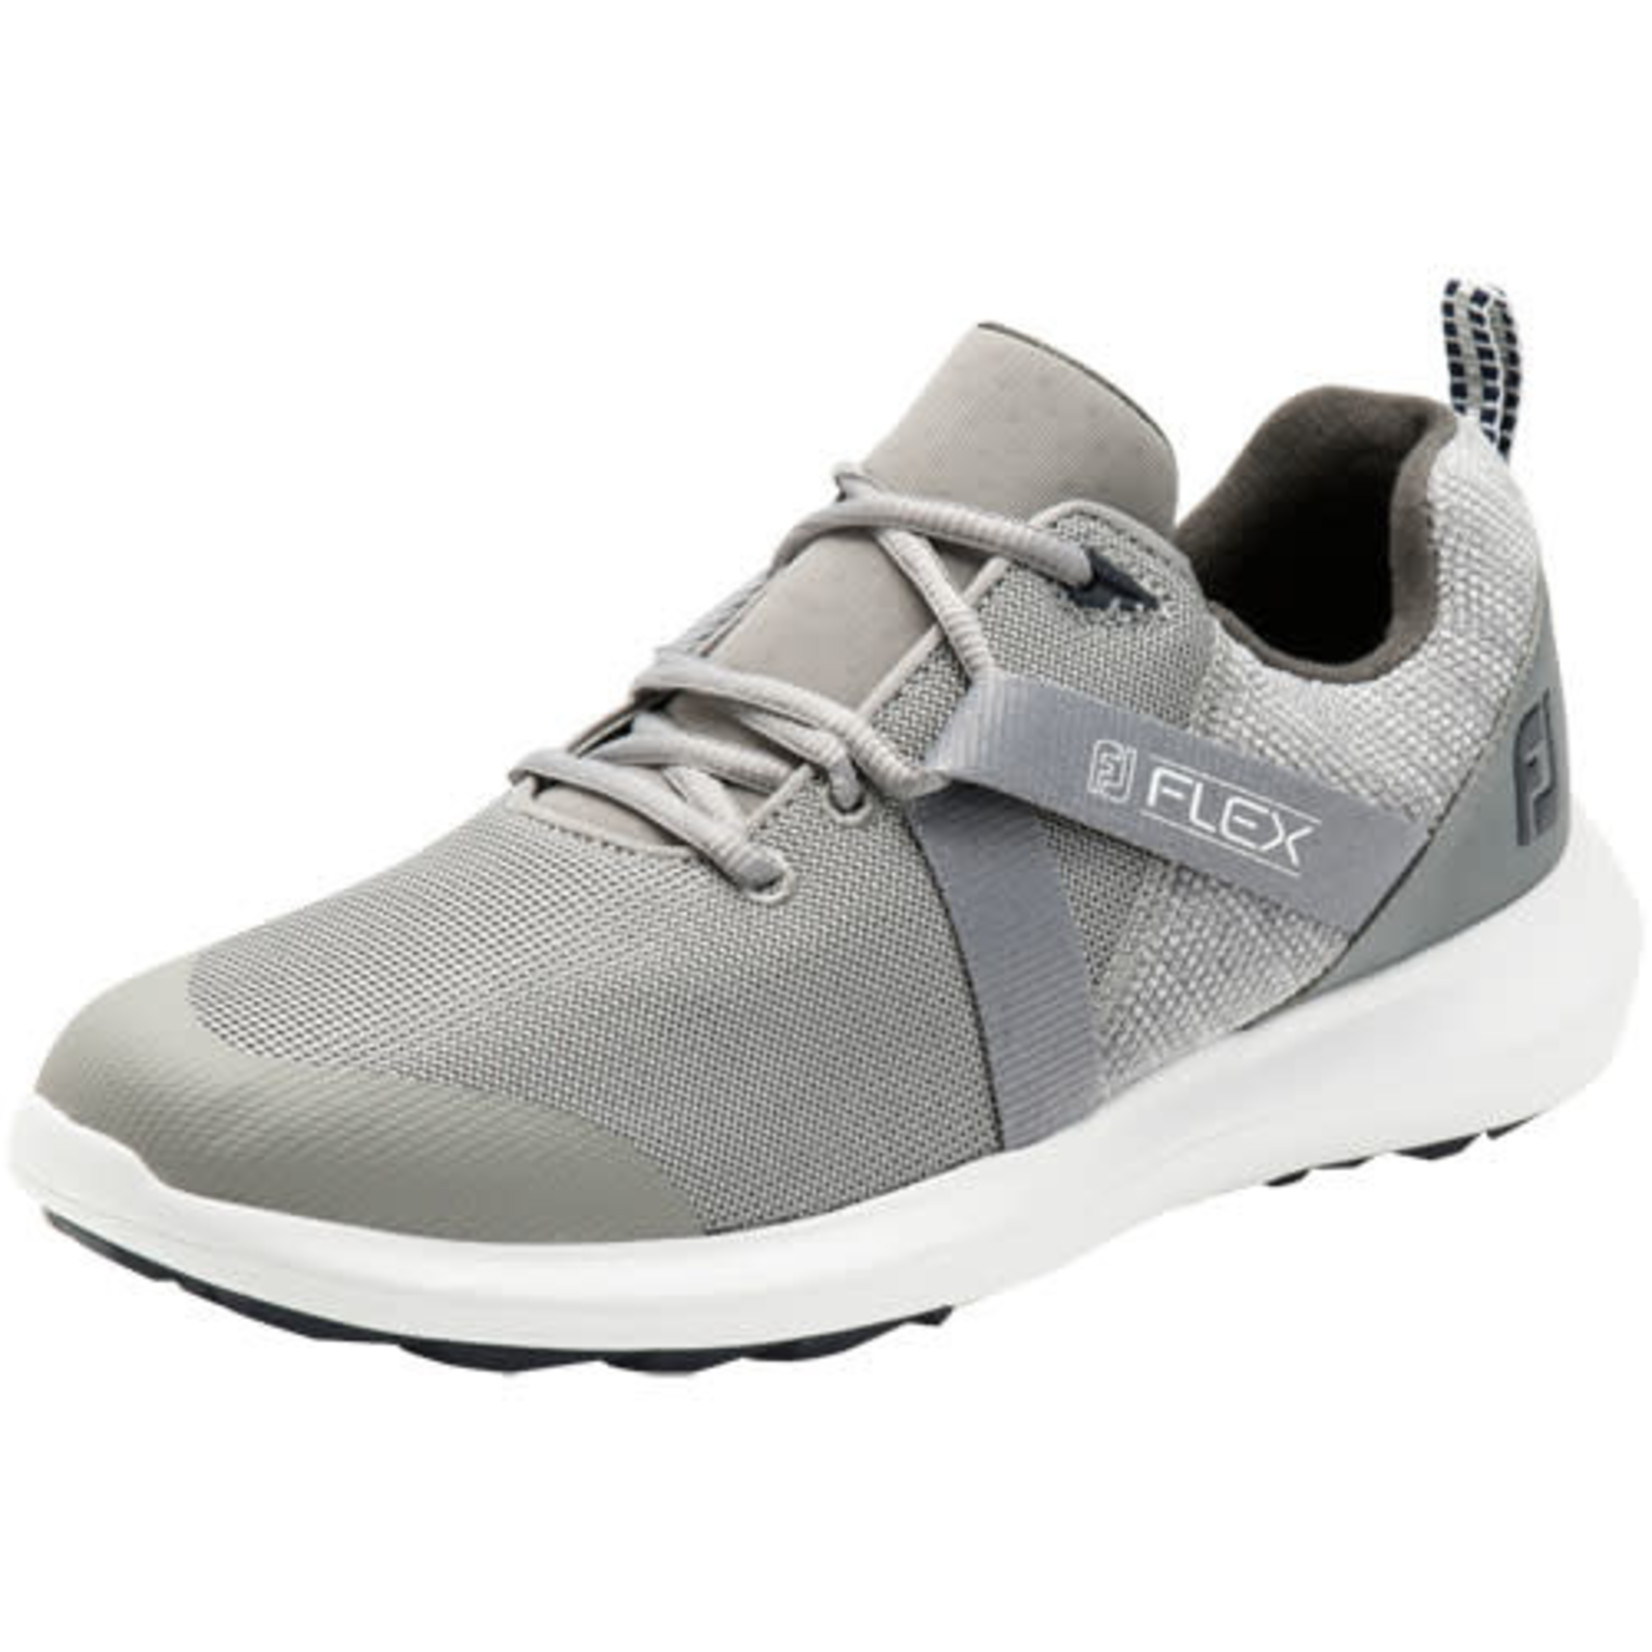 Footjoy Men's FootJoy Flex Spikeless Golf Shoe Grey